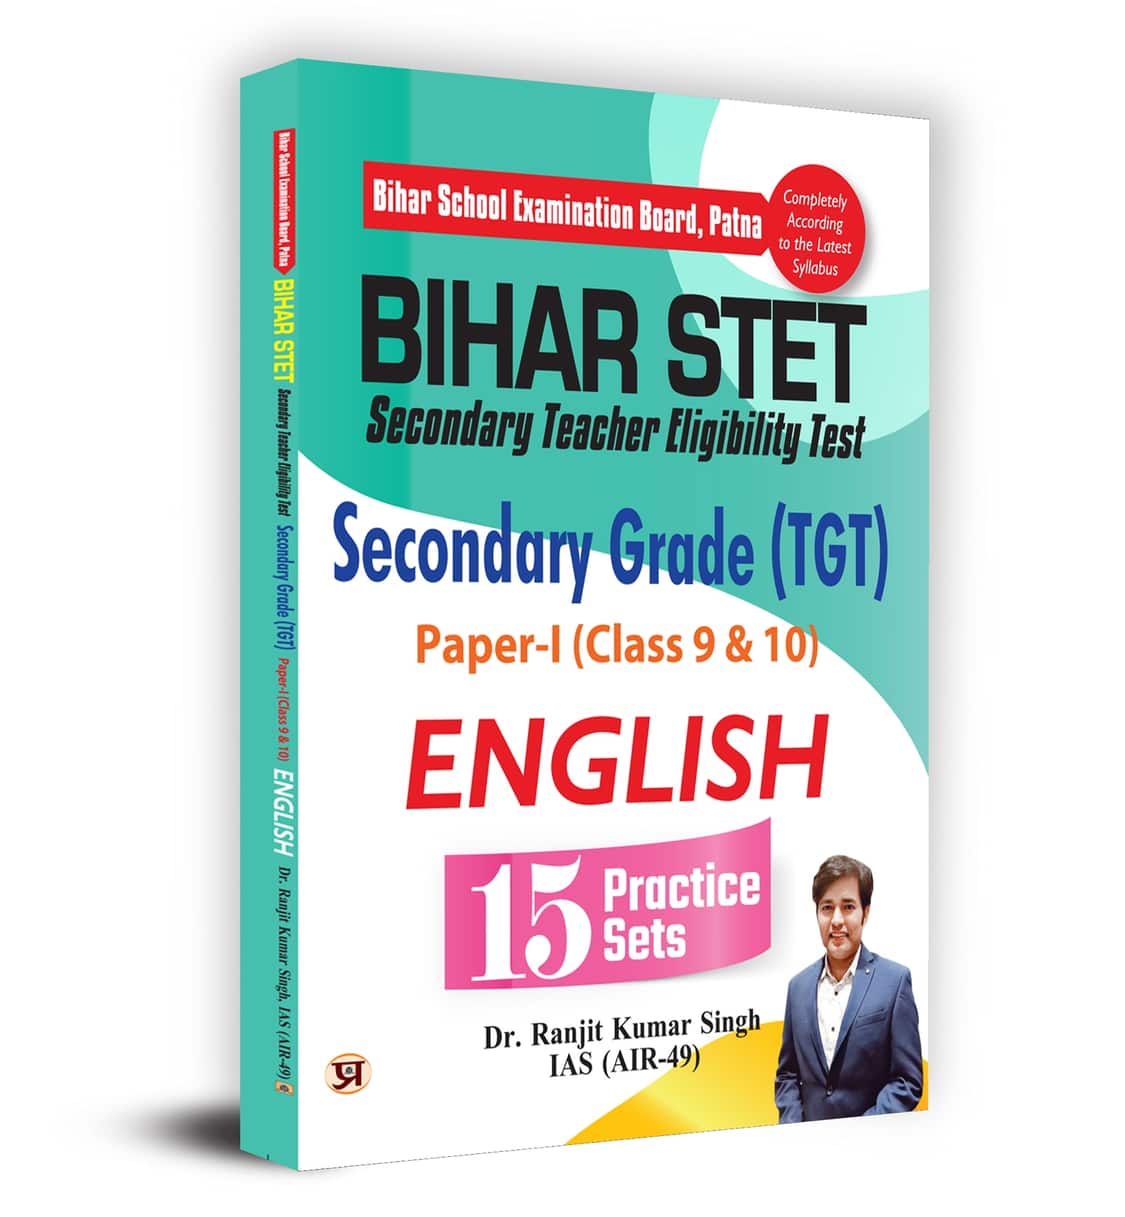 Bihar STET Secondary Teacher Eligibility Test Secondary Grade (TGT) Paper-1 (Class 9 & 10) English 15 Practice Sets